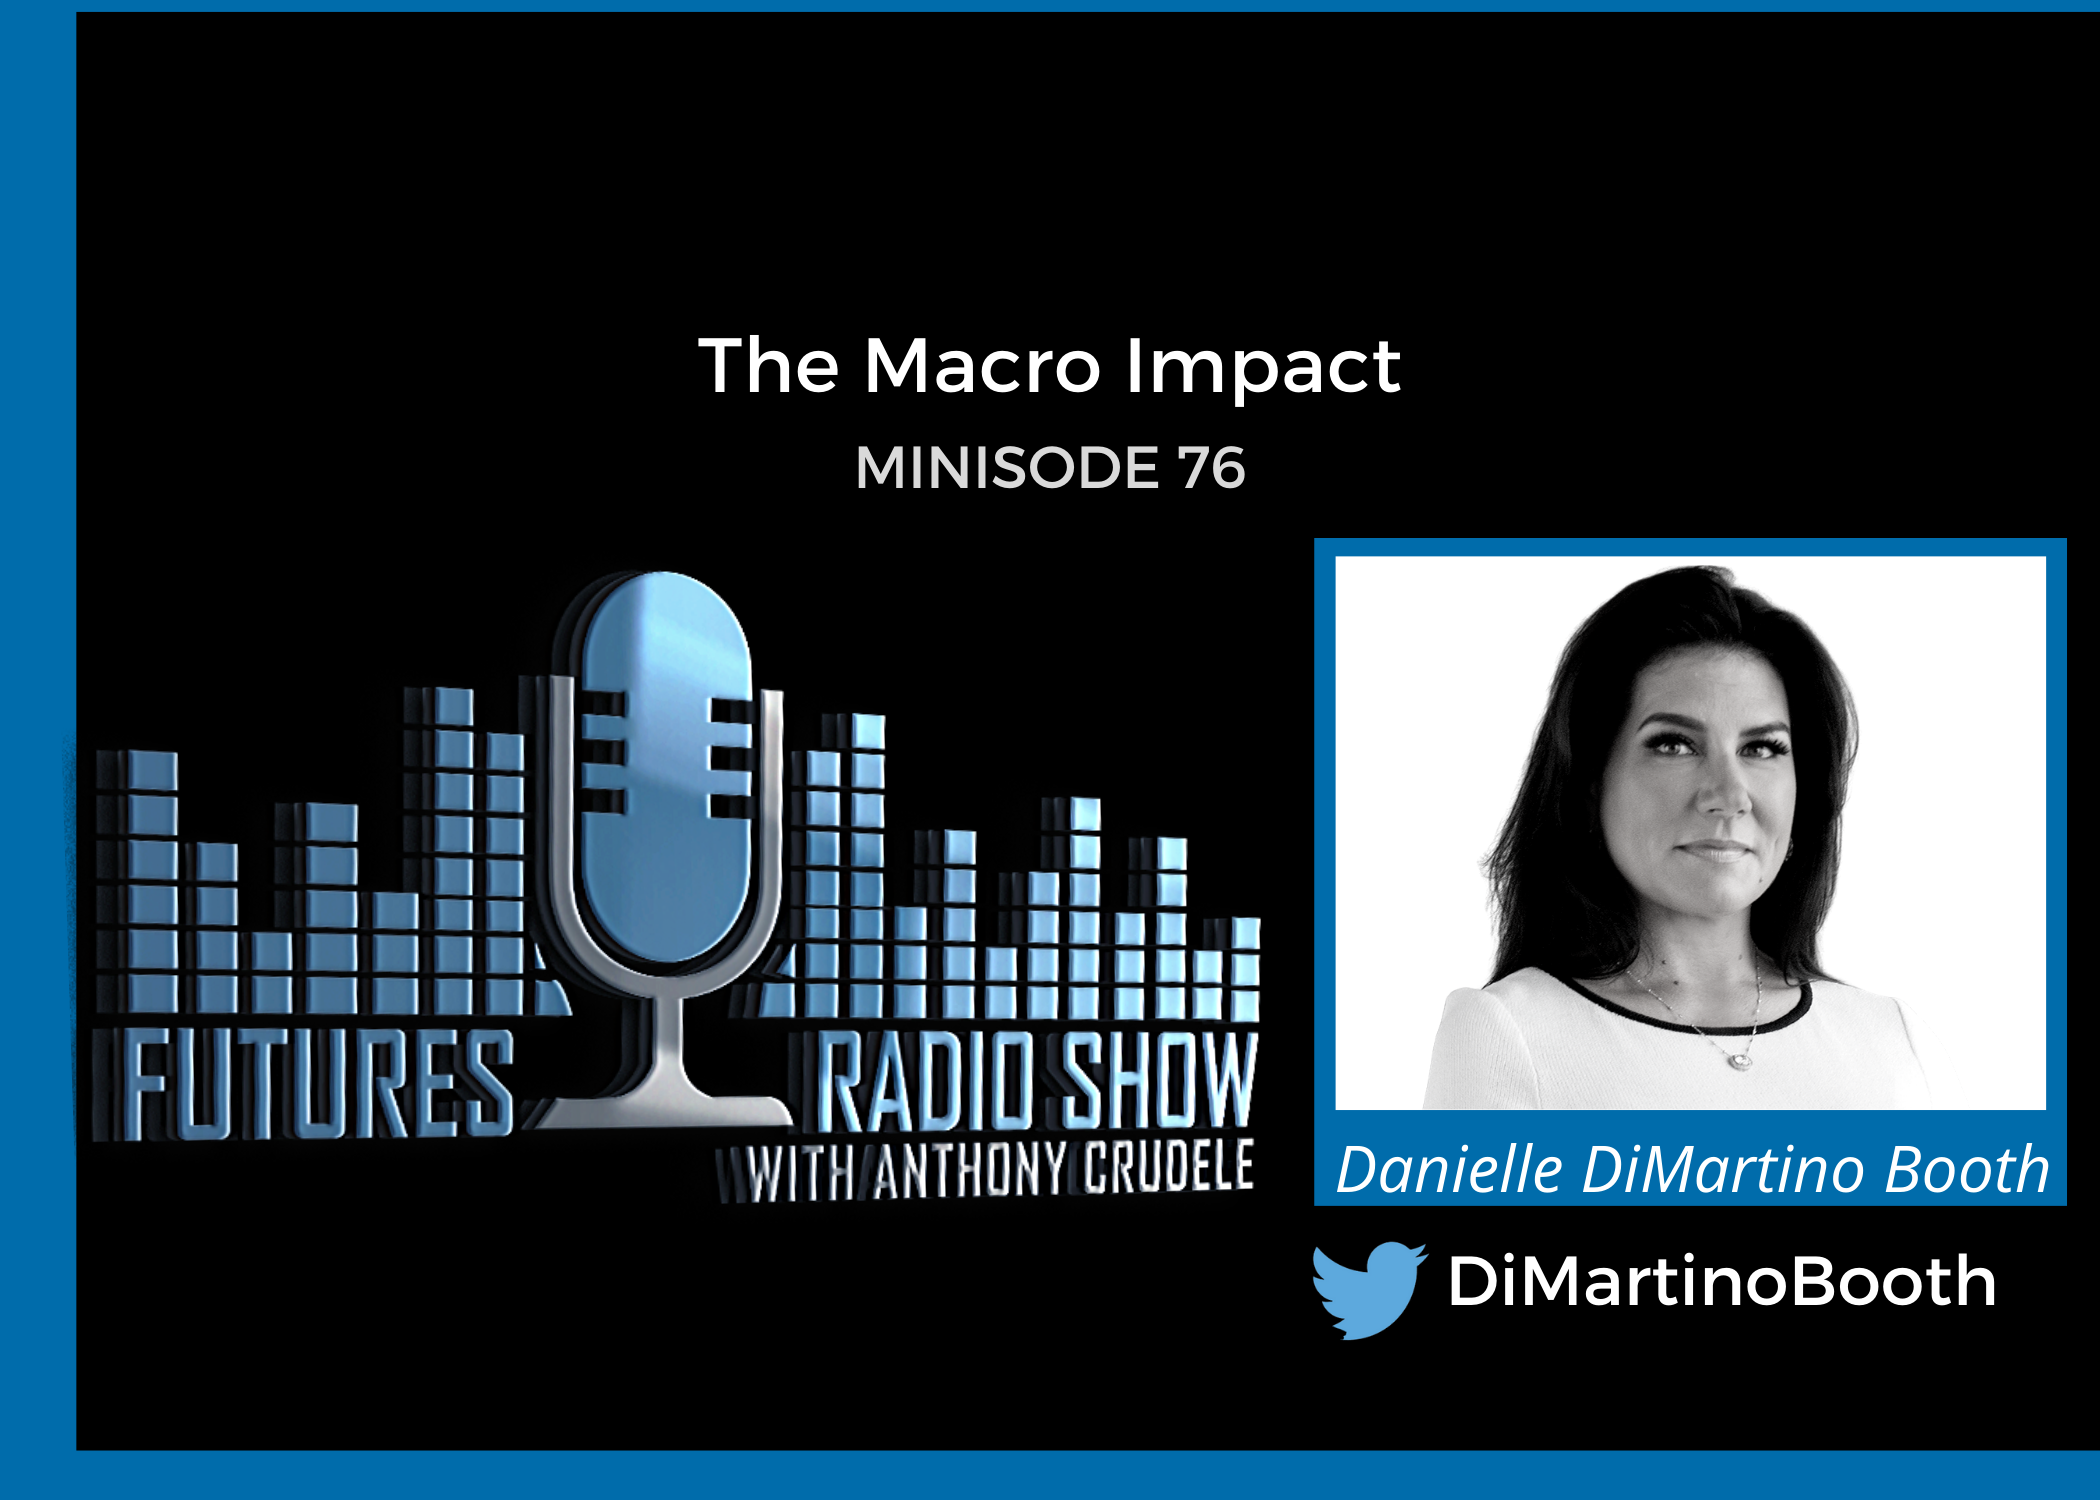 The Macro Impact – Danielle DiMartino Booth